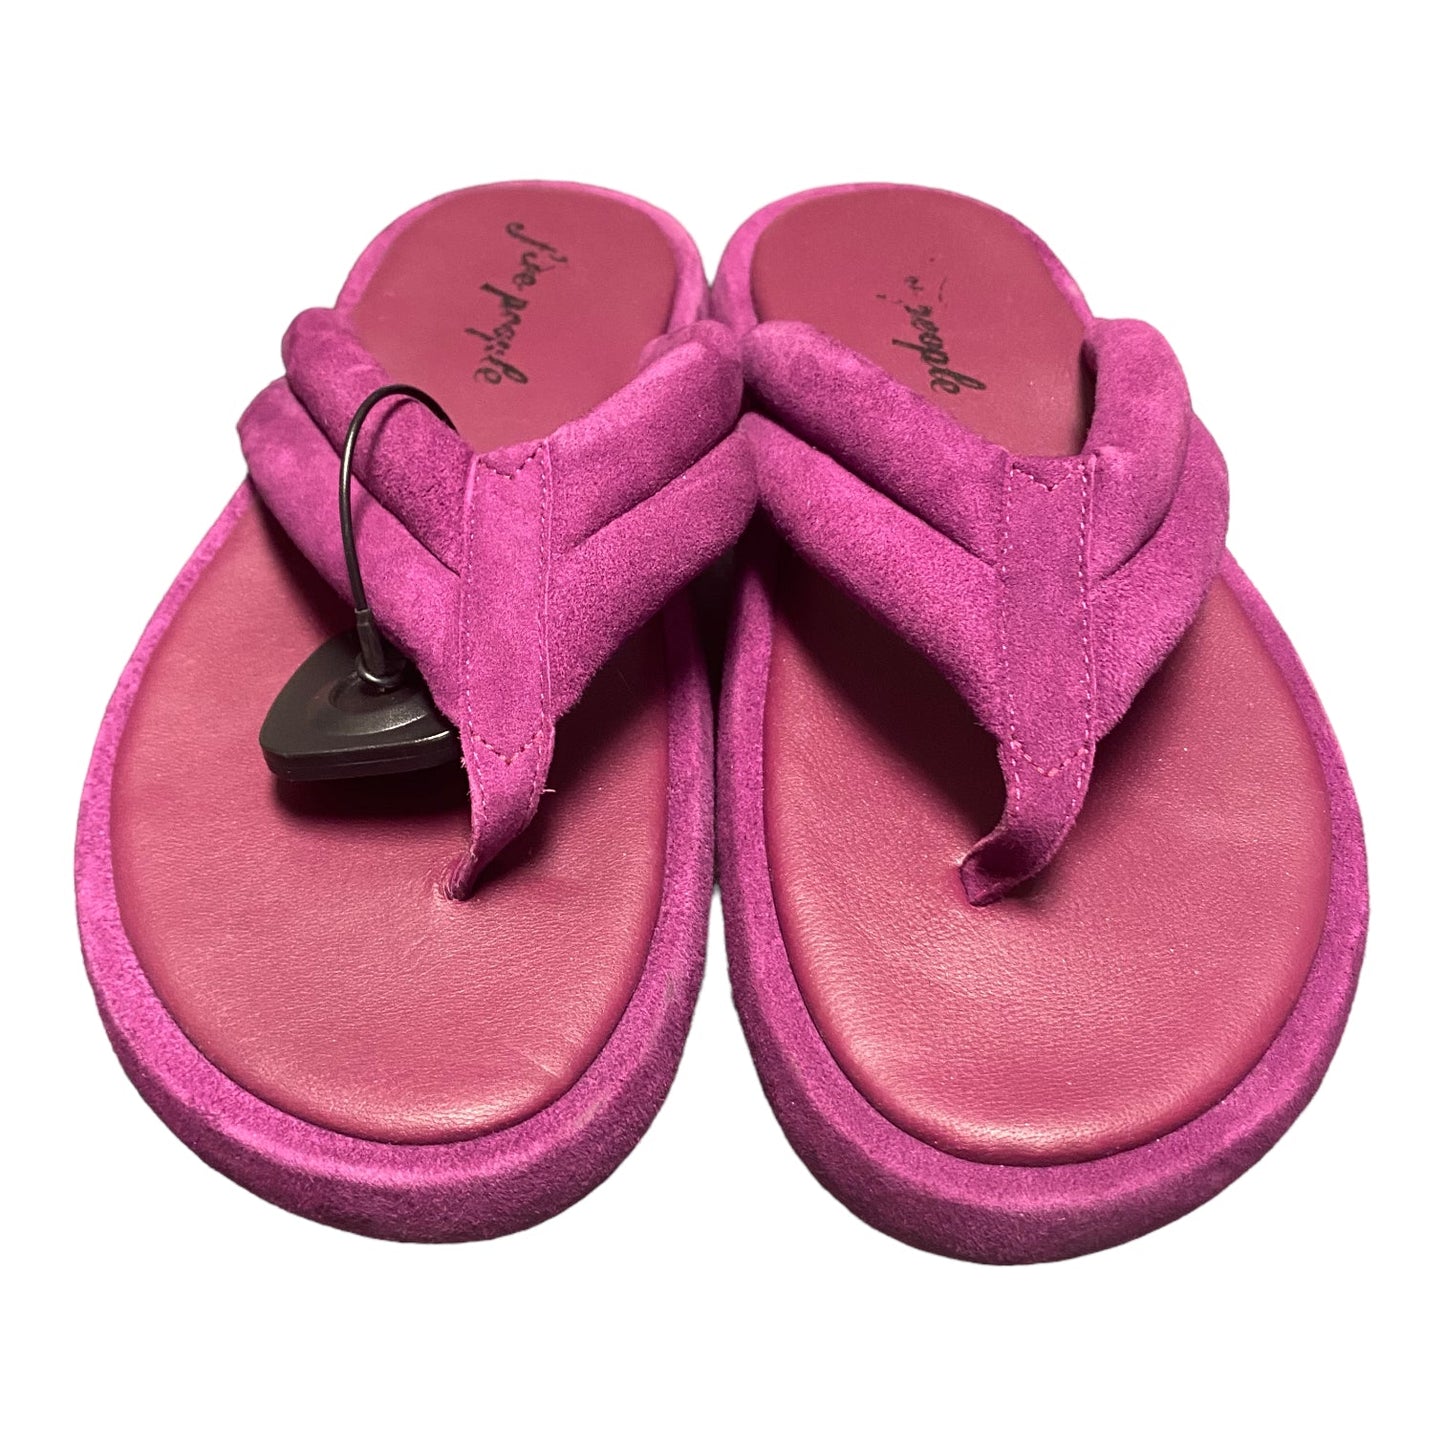 Purple Sandals Flats Free People, Size 9.5